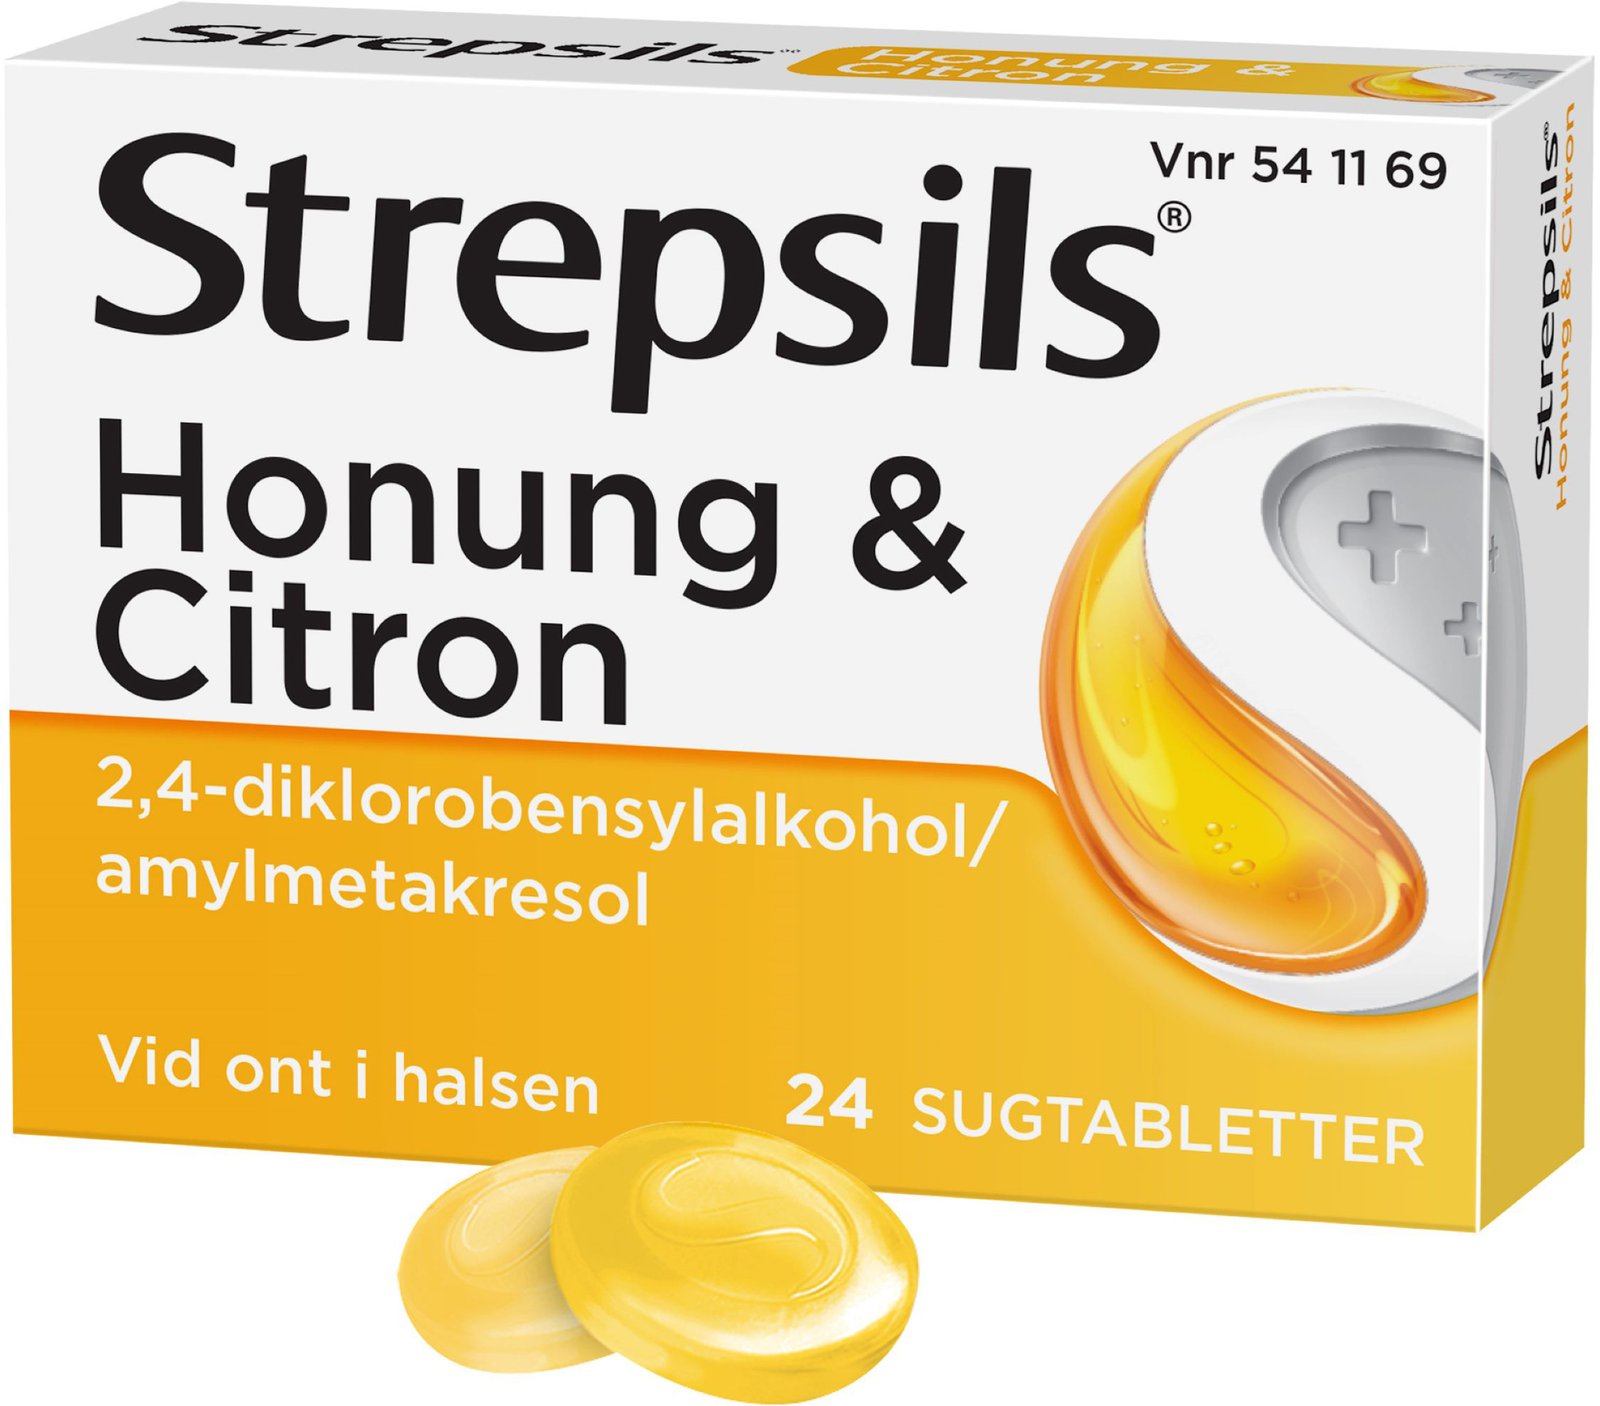 Strepsils Honung & Citron 24 sugtabletter